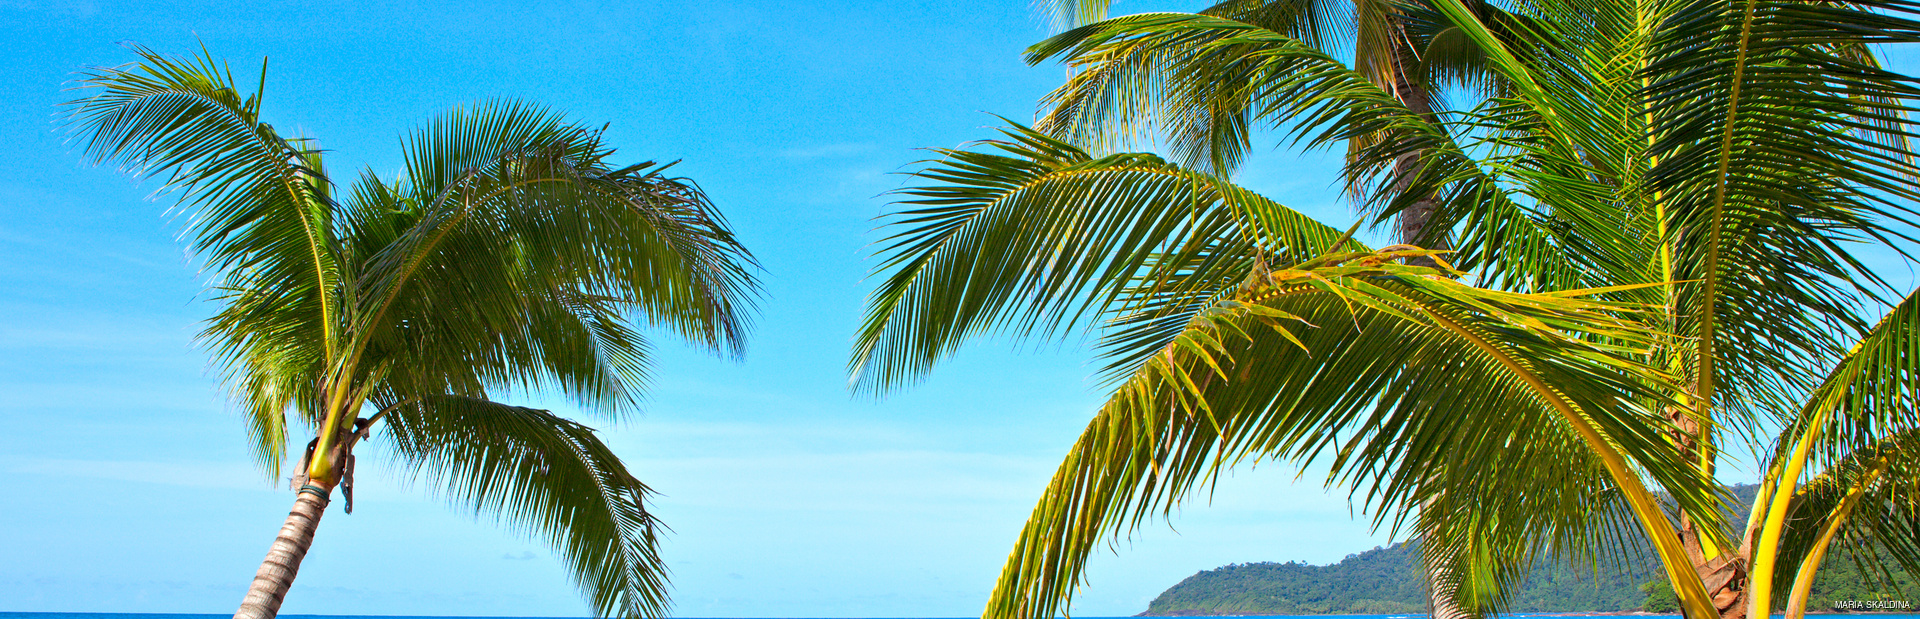 Palm trees on a Solomon Island beach